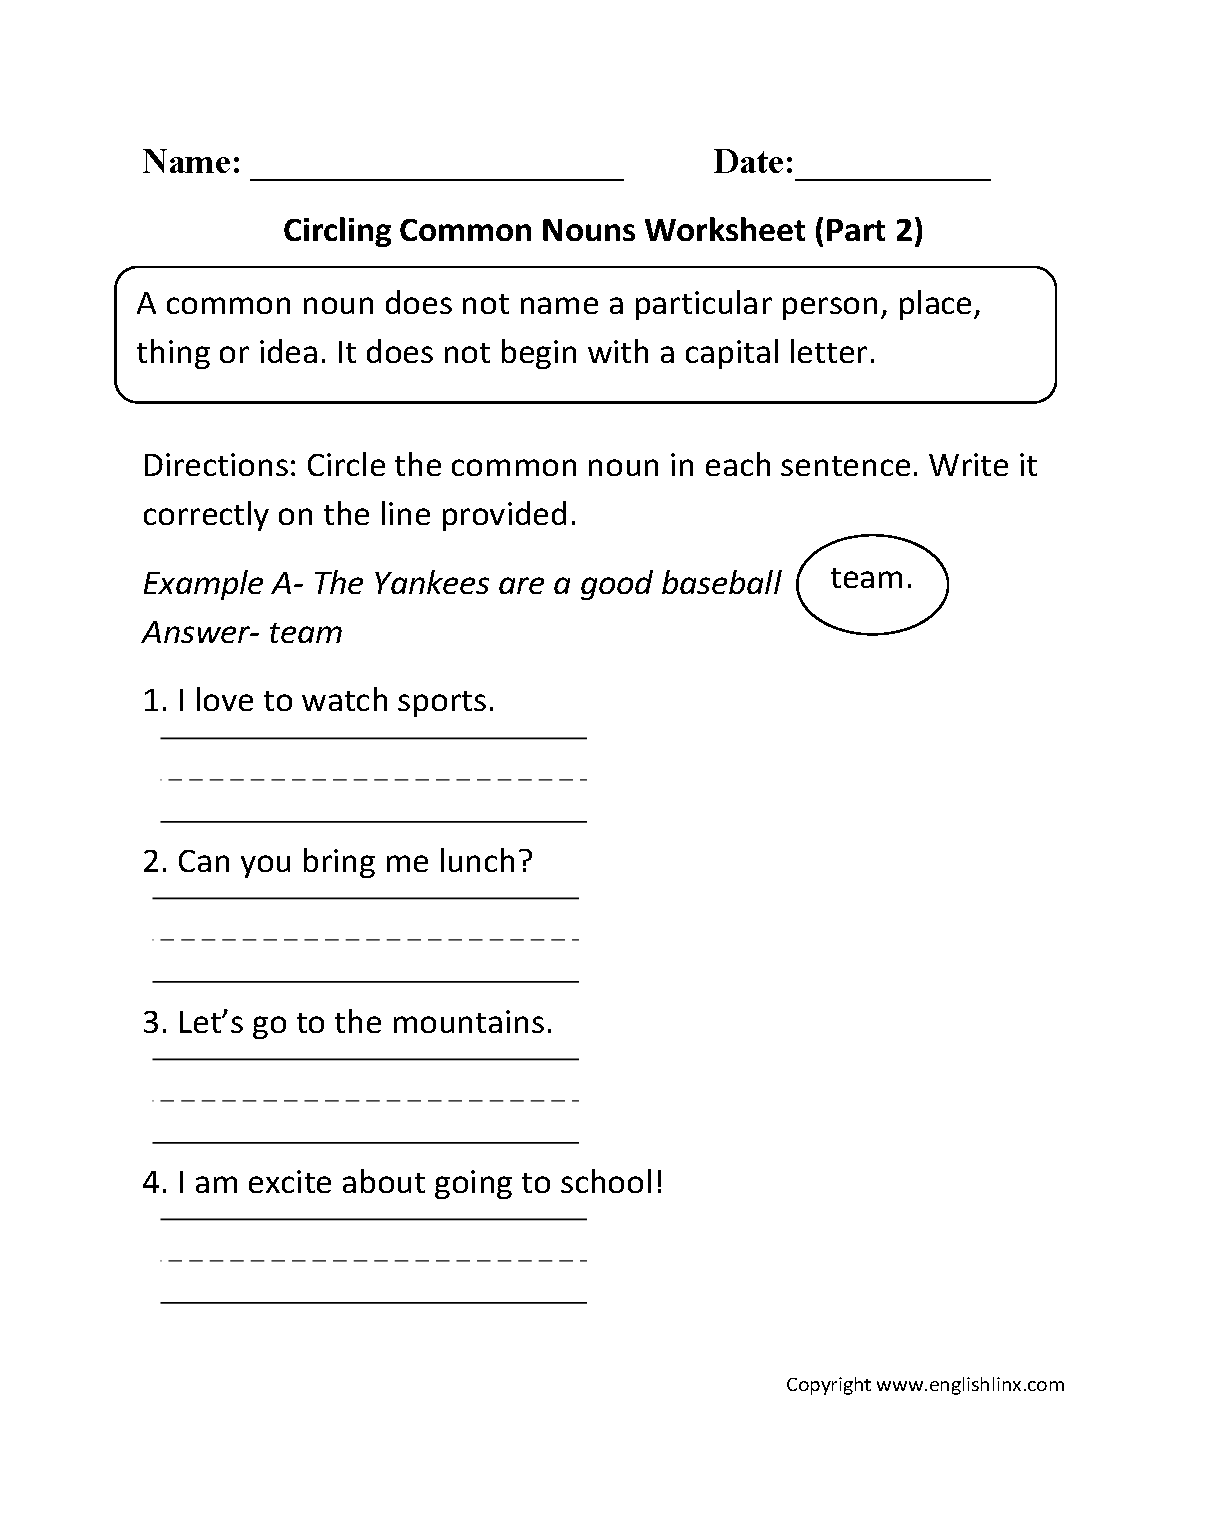 Circling Common Nouns Worksheet Part 2